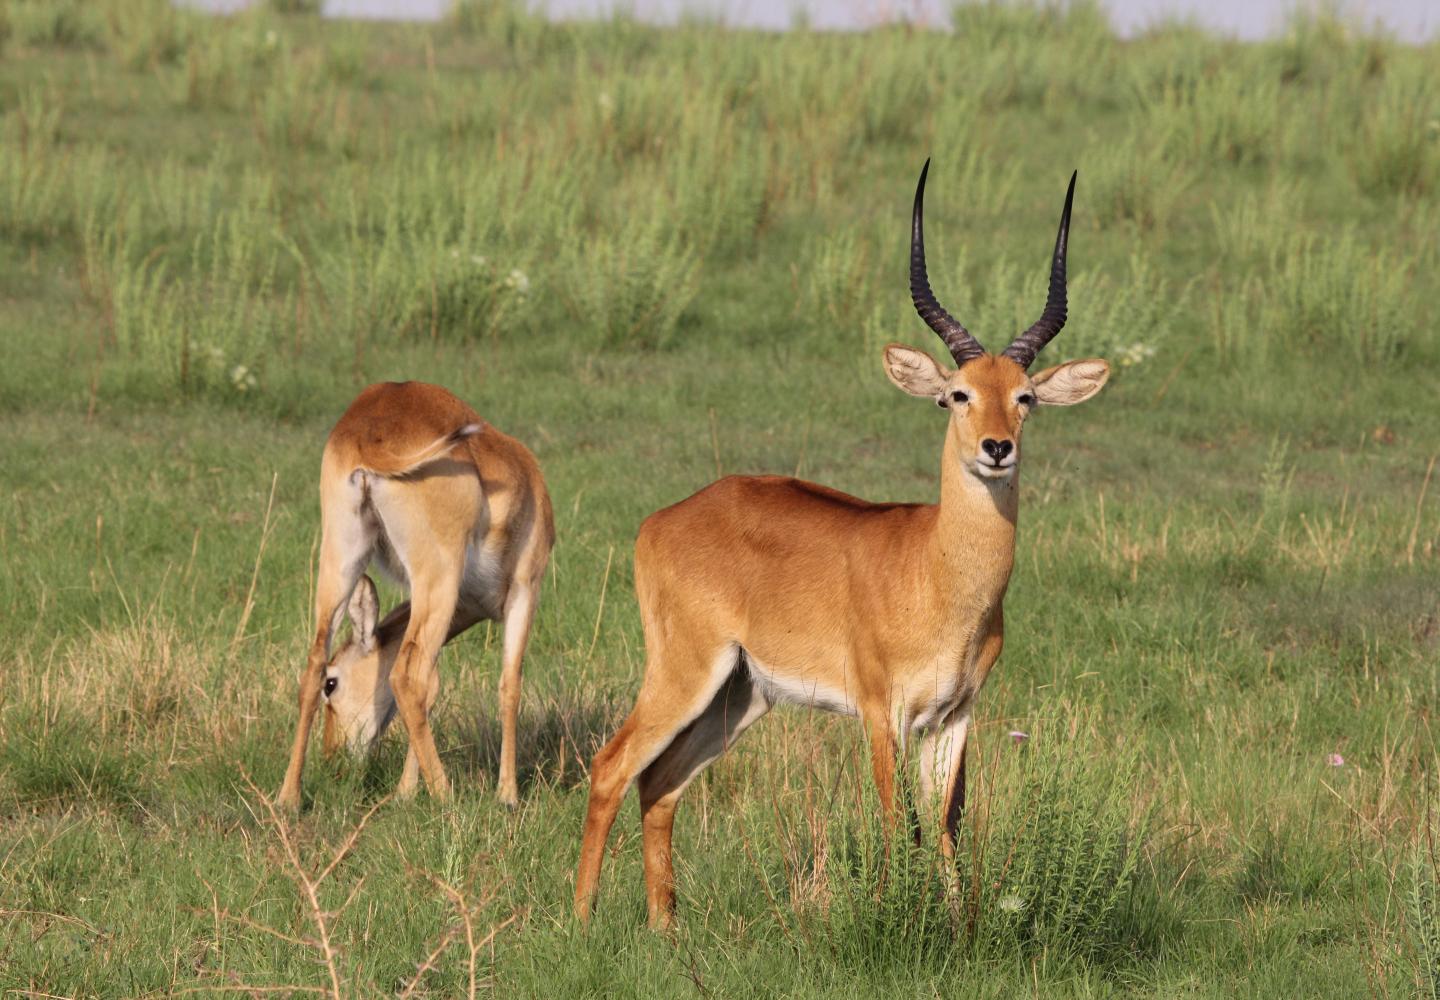 Uganda Kob - Queen Elizabeth National Park